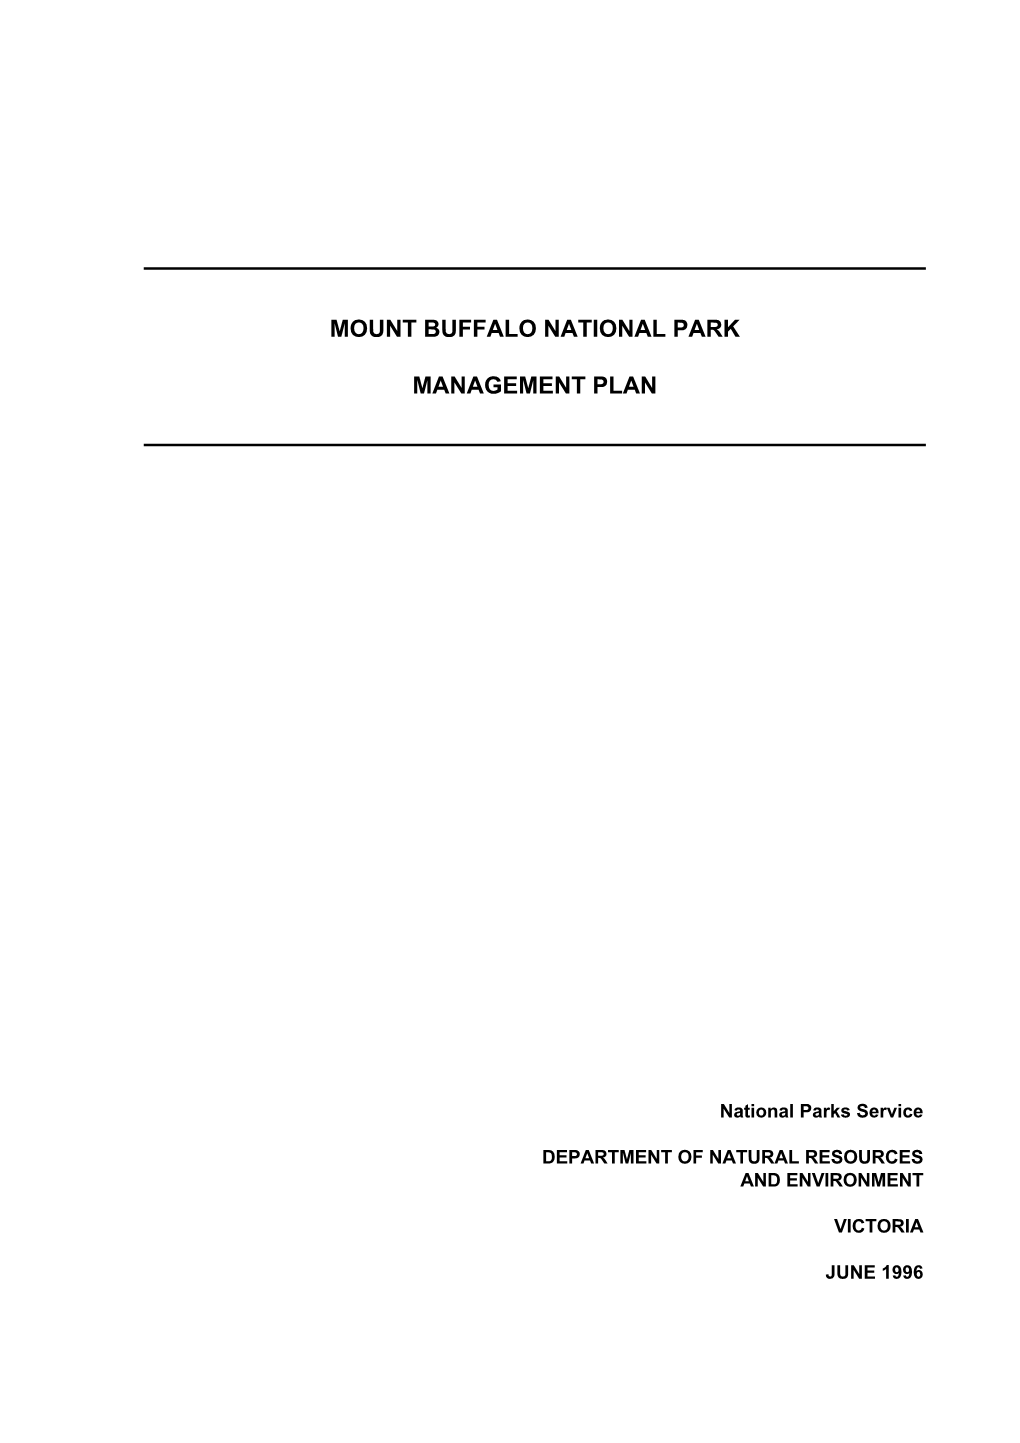 Mount Buffalo National Park Management Plan